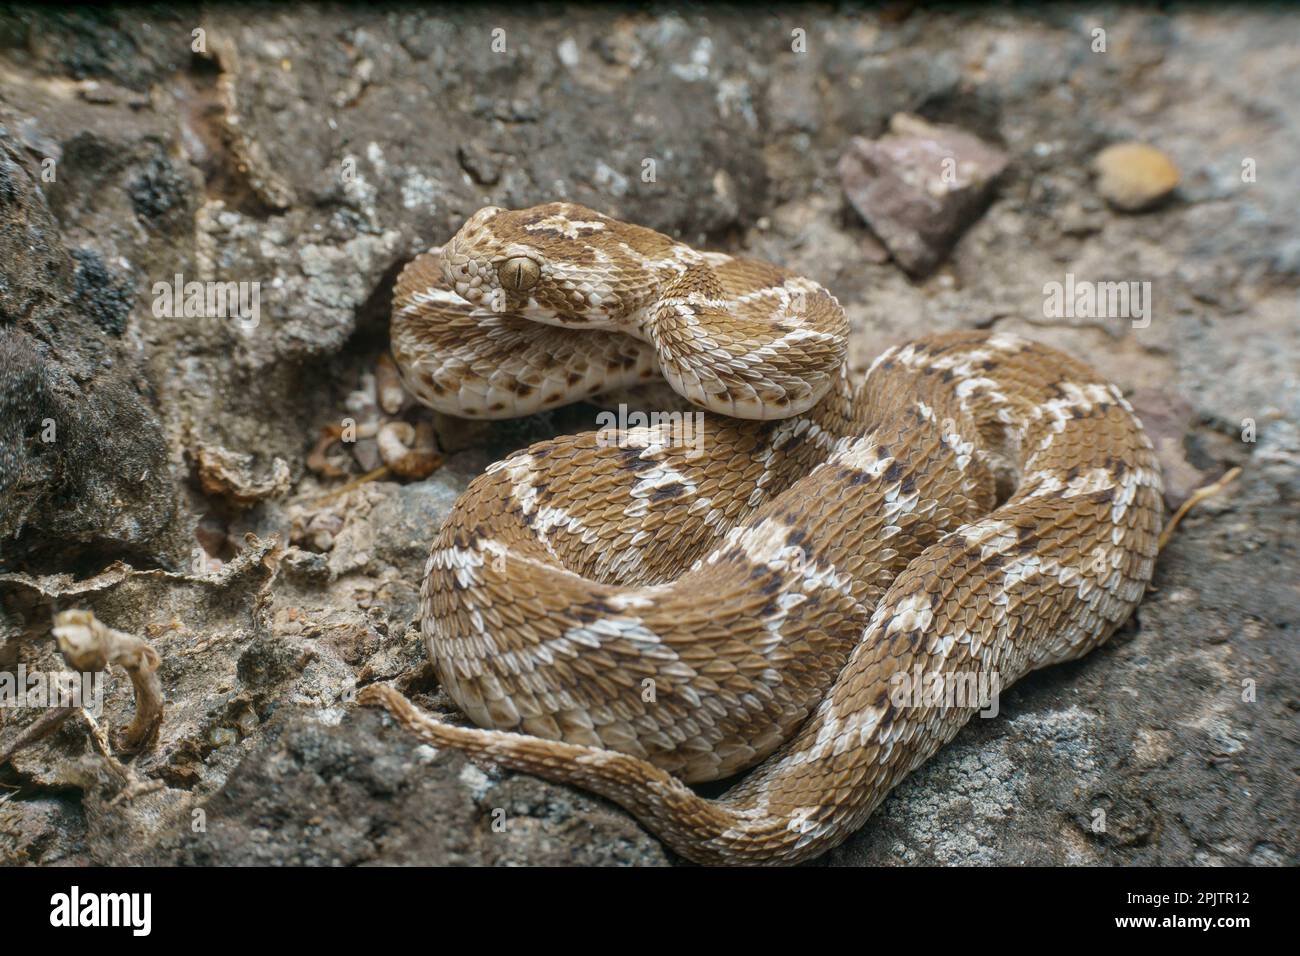 Saw scaled viper (echis carinatus), satara maharashtra india (2) Stock Photo